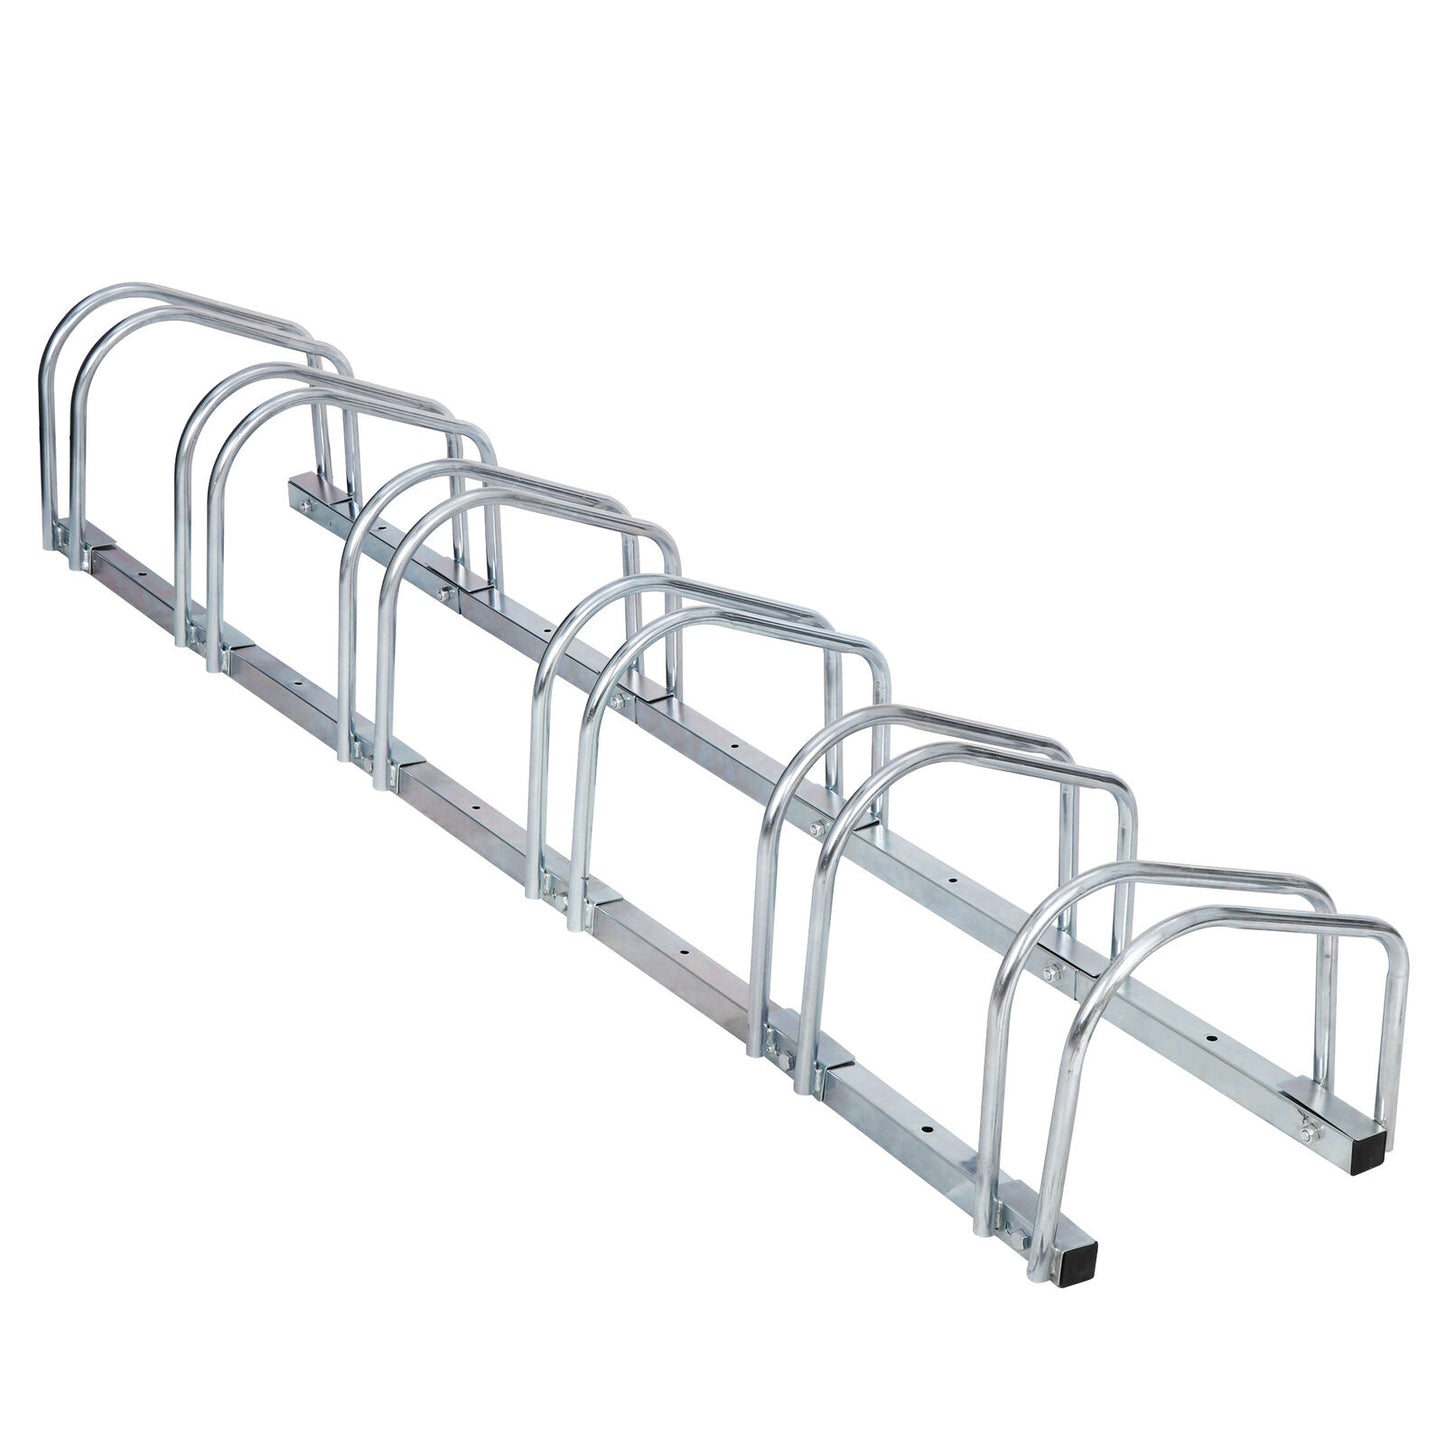 Bike Floor Parking 1-6 Rack Adjustable Bicycle Storage Organizer Stand Garage